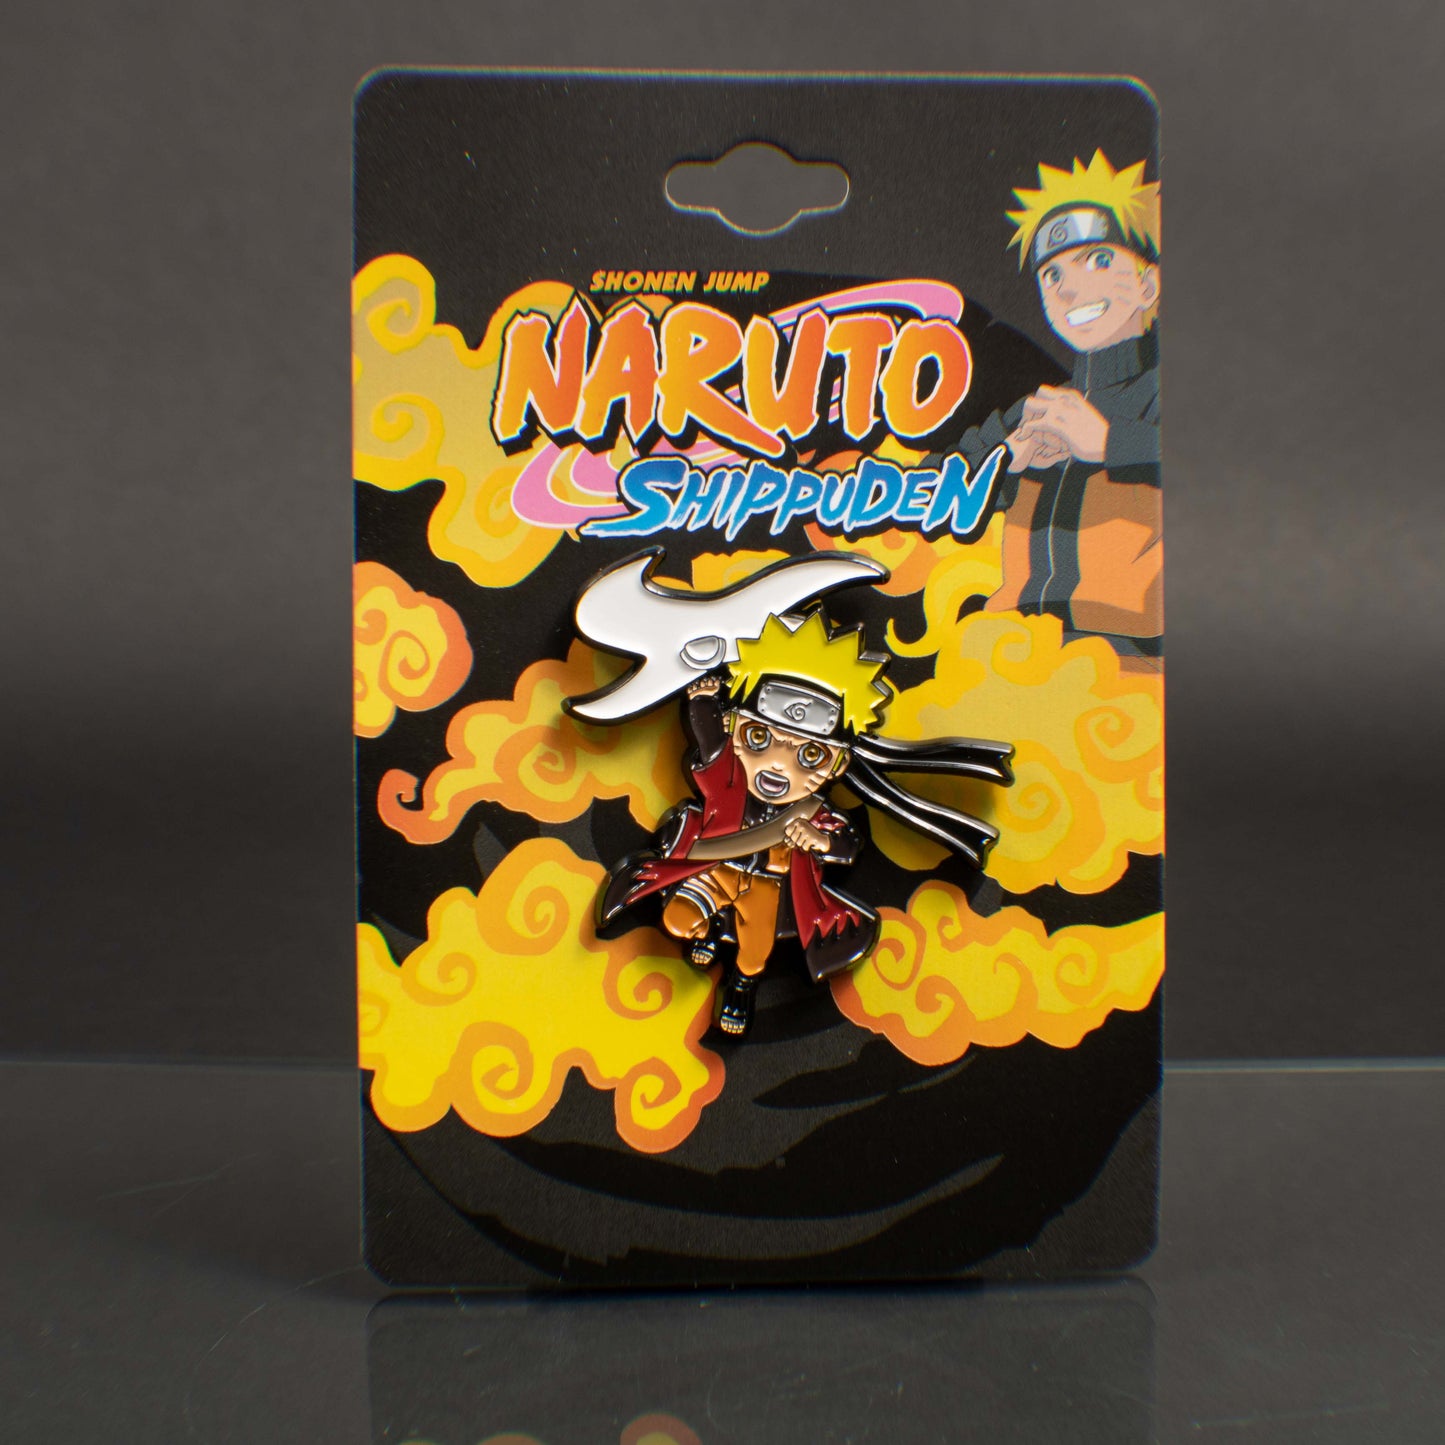 Naruto Anime TV Series Takashi Head Image Metal Enamel Pin NEW UNUSED